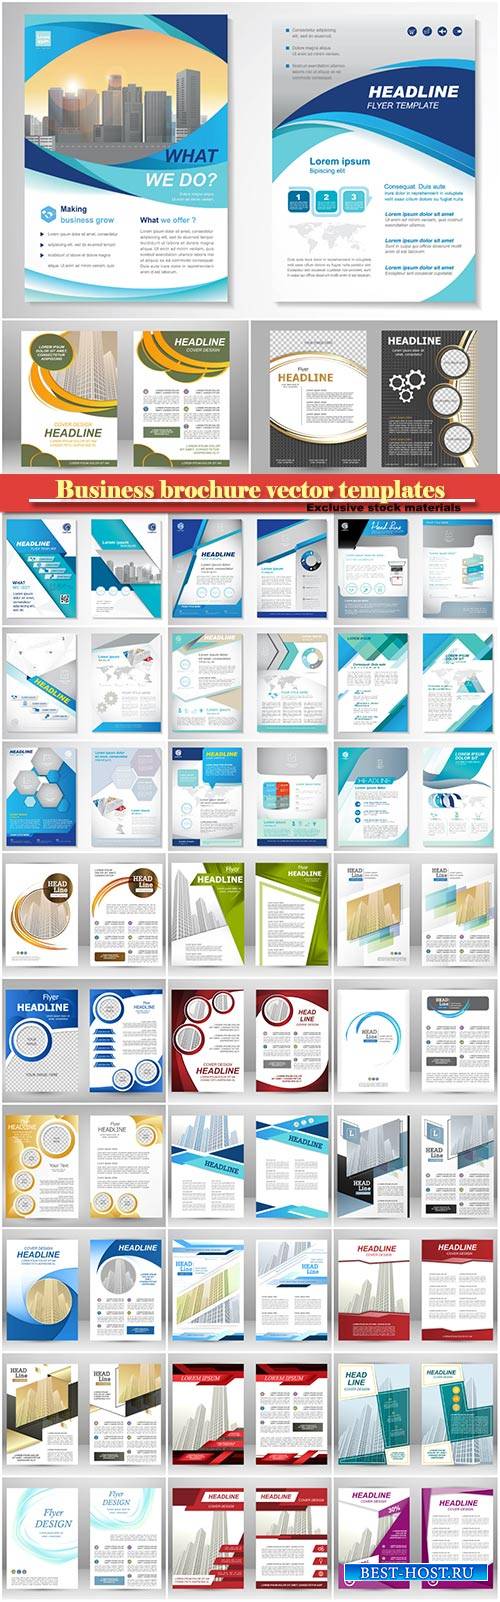 Business brochure vector, flyers templates #19